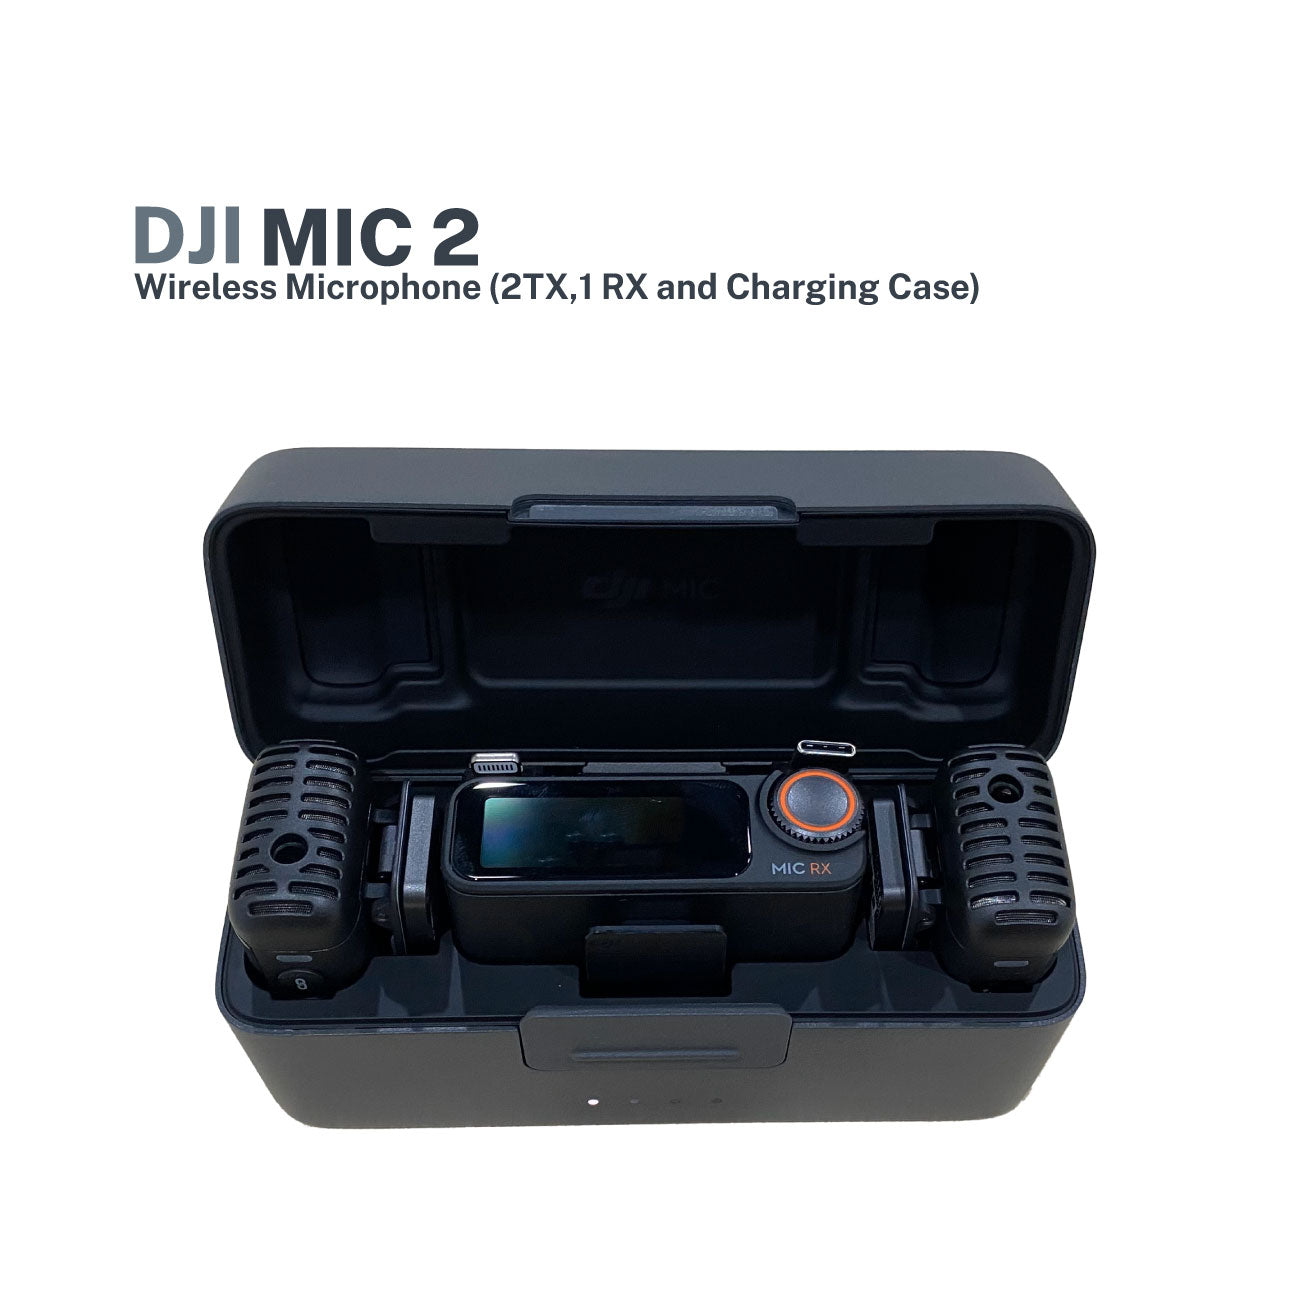 DJI Mic 2 (2TX+1RX+charging Case)